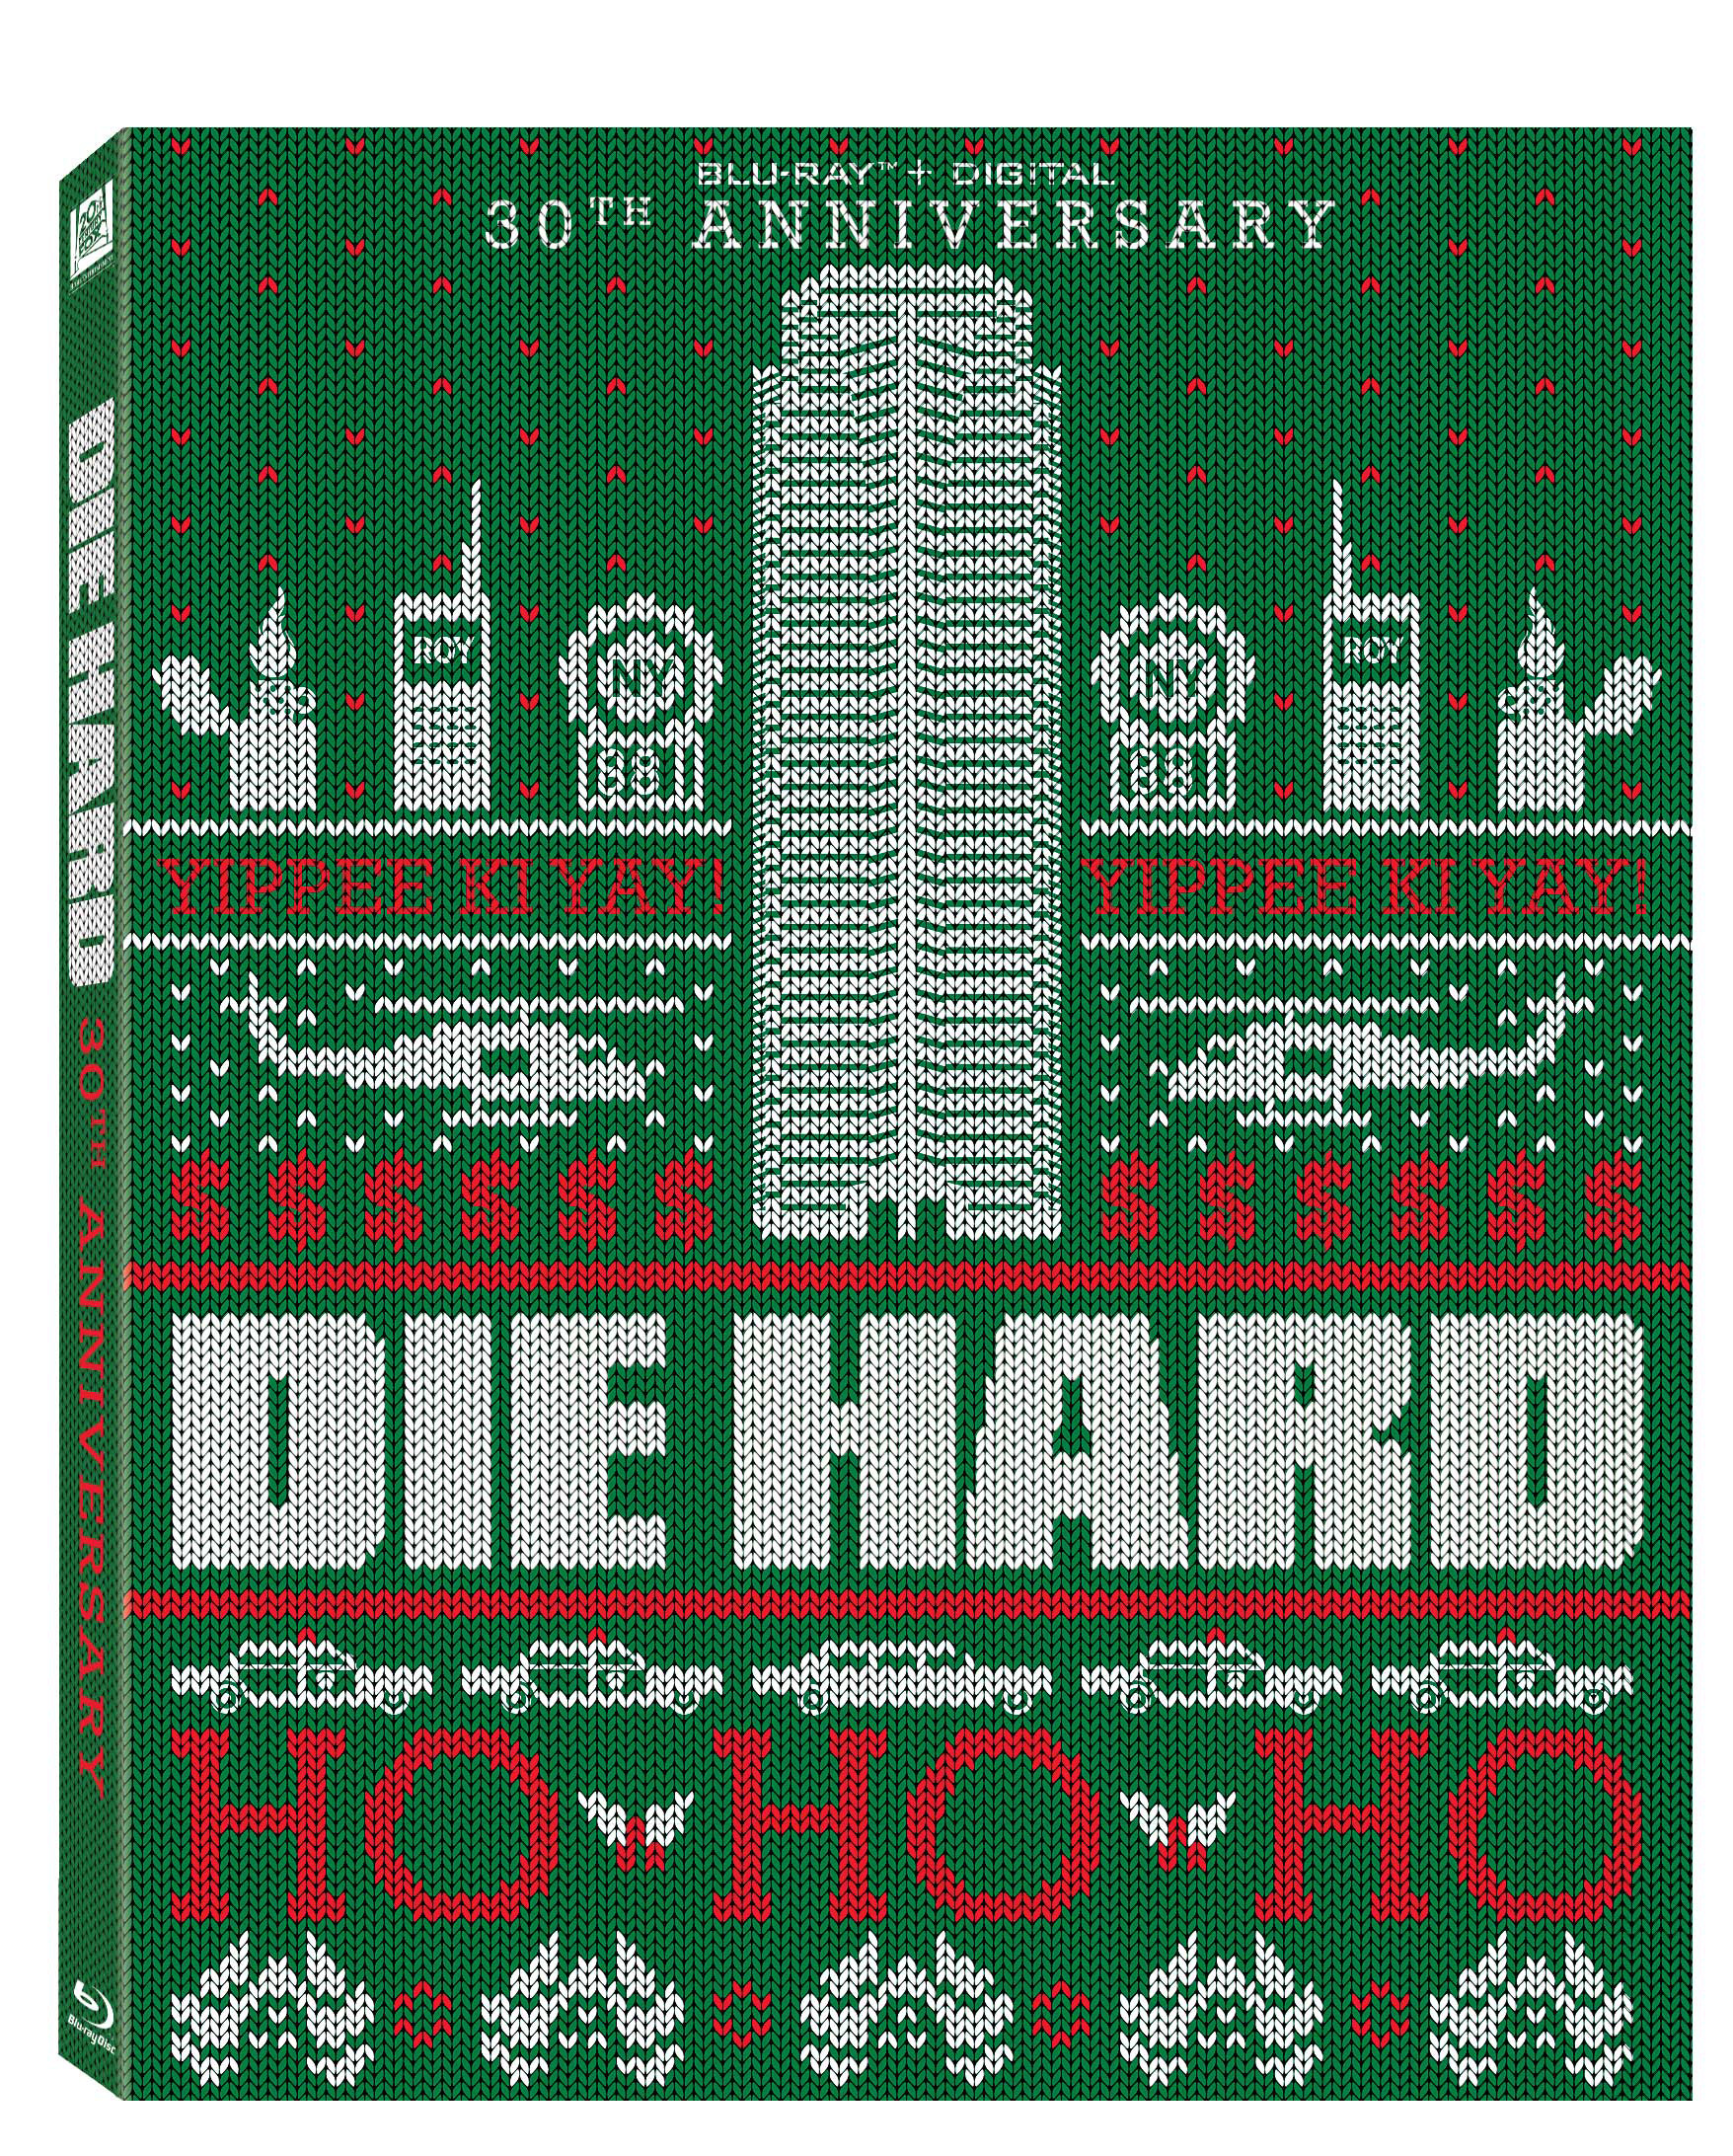 Die Hard gets Christmas makeover